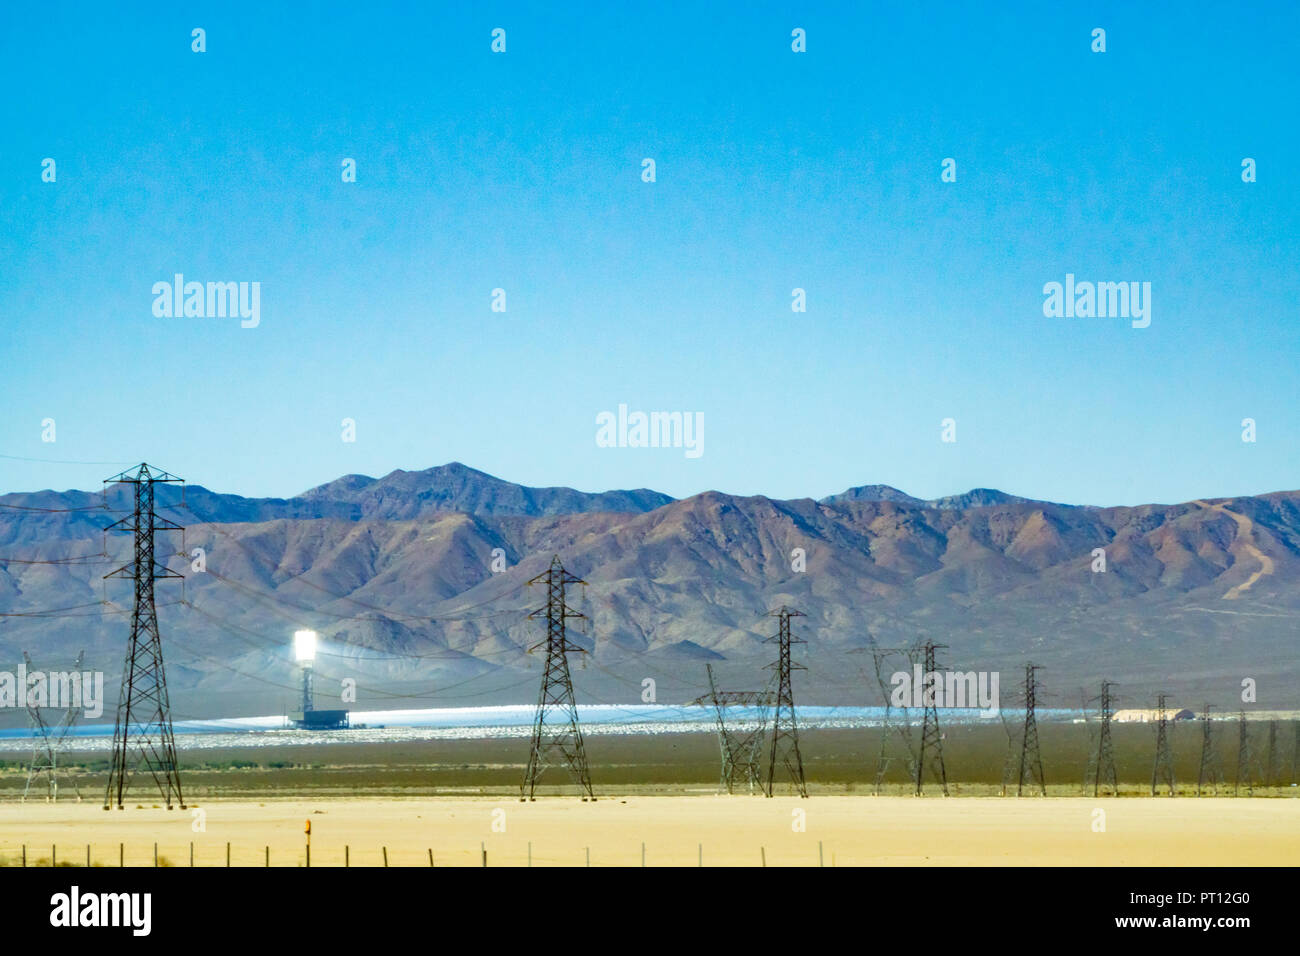 The Ivapaugh Solar Electric Generating System on the California Nevada border along Interstate 15 USA Stock Photo